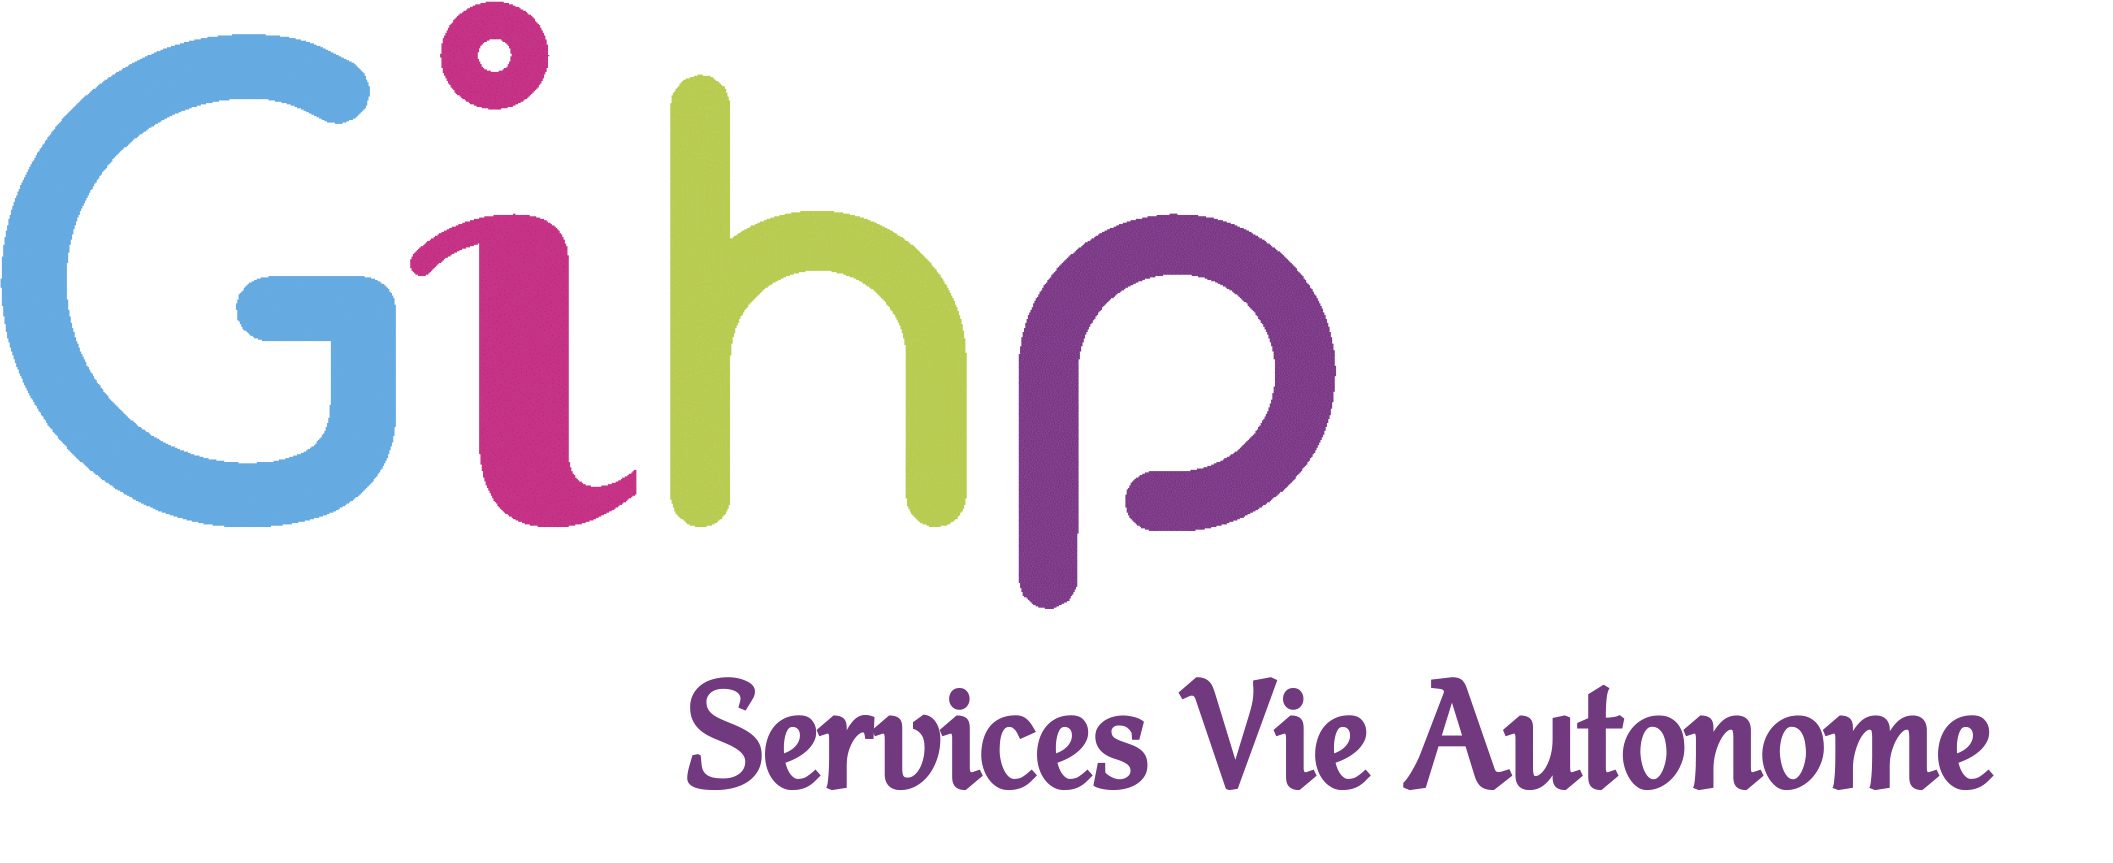 GIHP - Services Vie Autonome